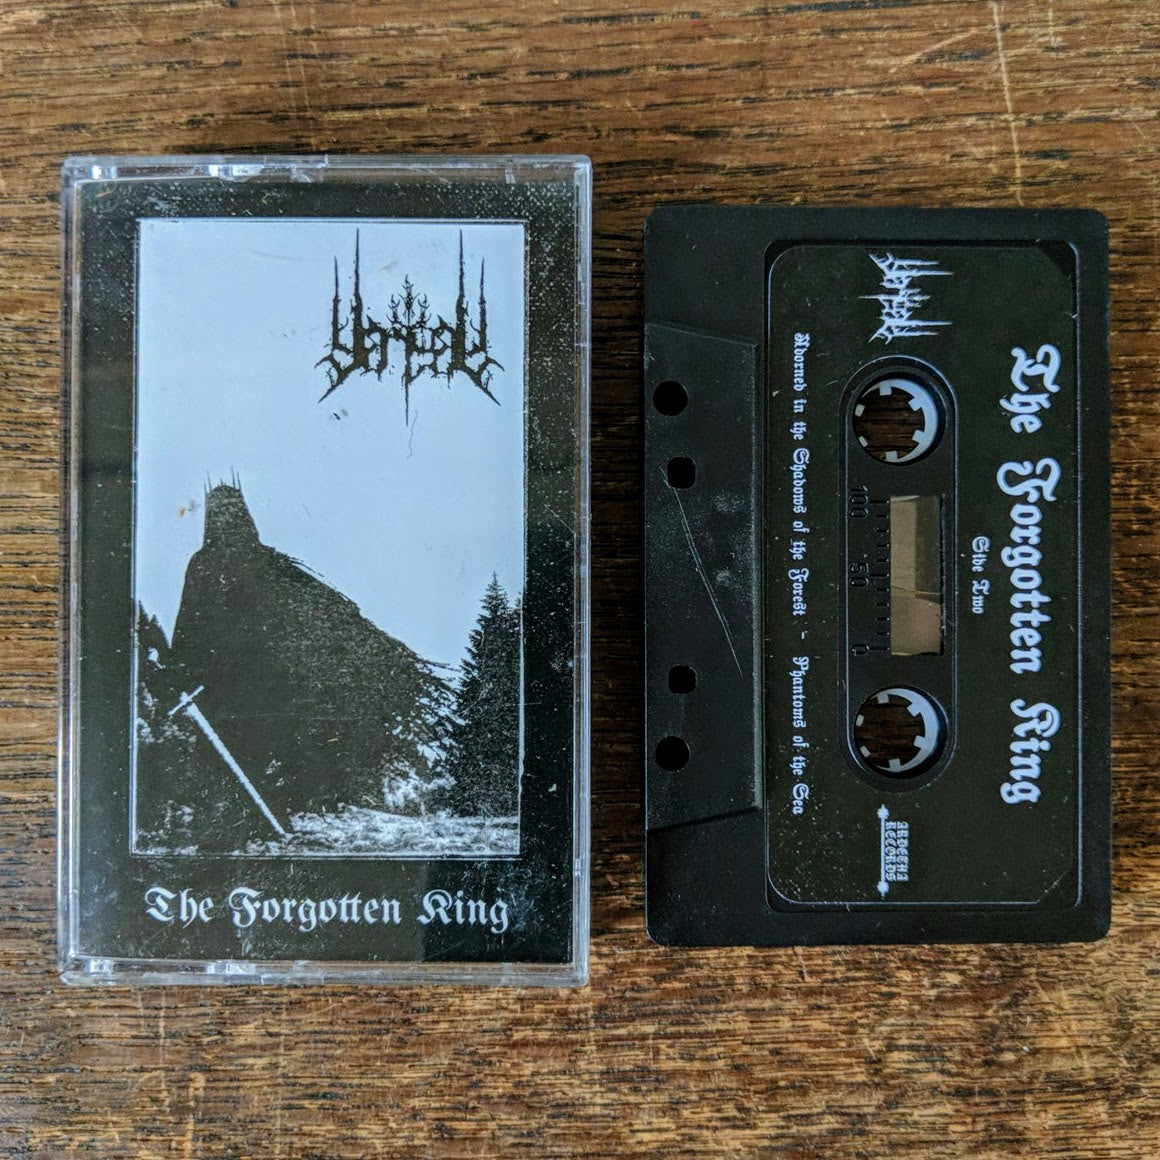 [SOLD OUT] VANGAR "The Forgotten King" Cassette Tape